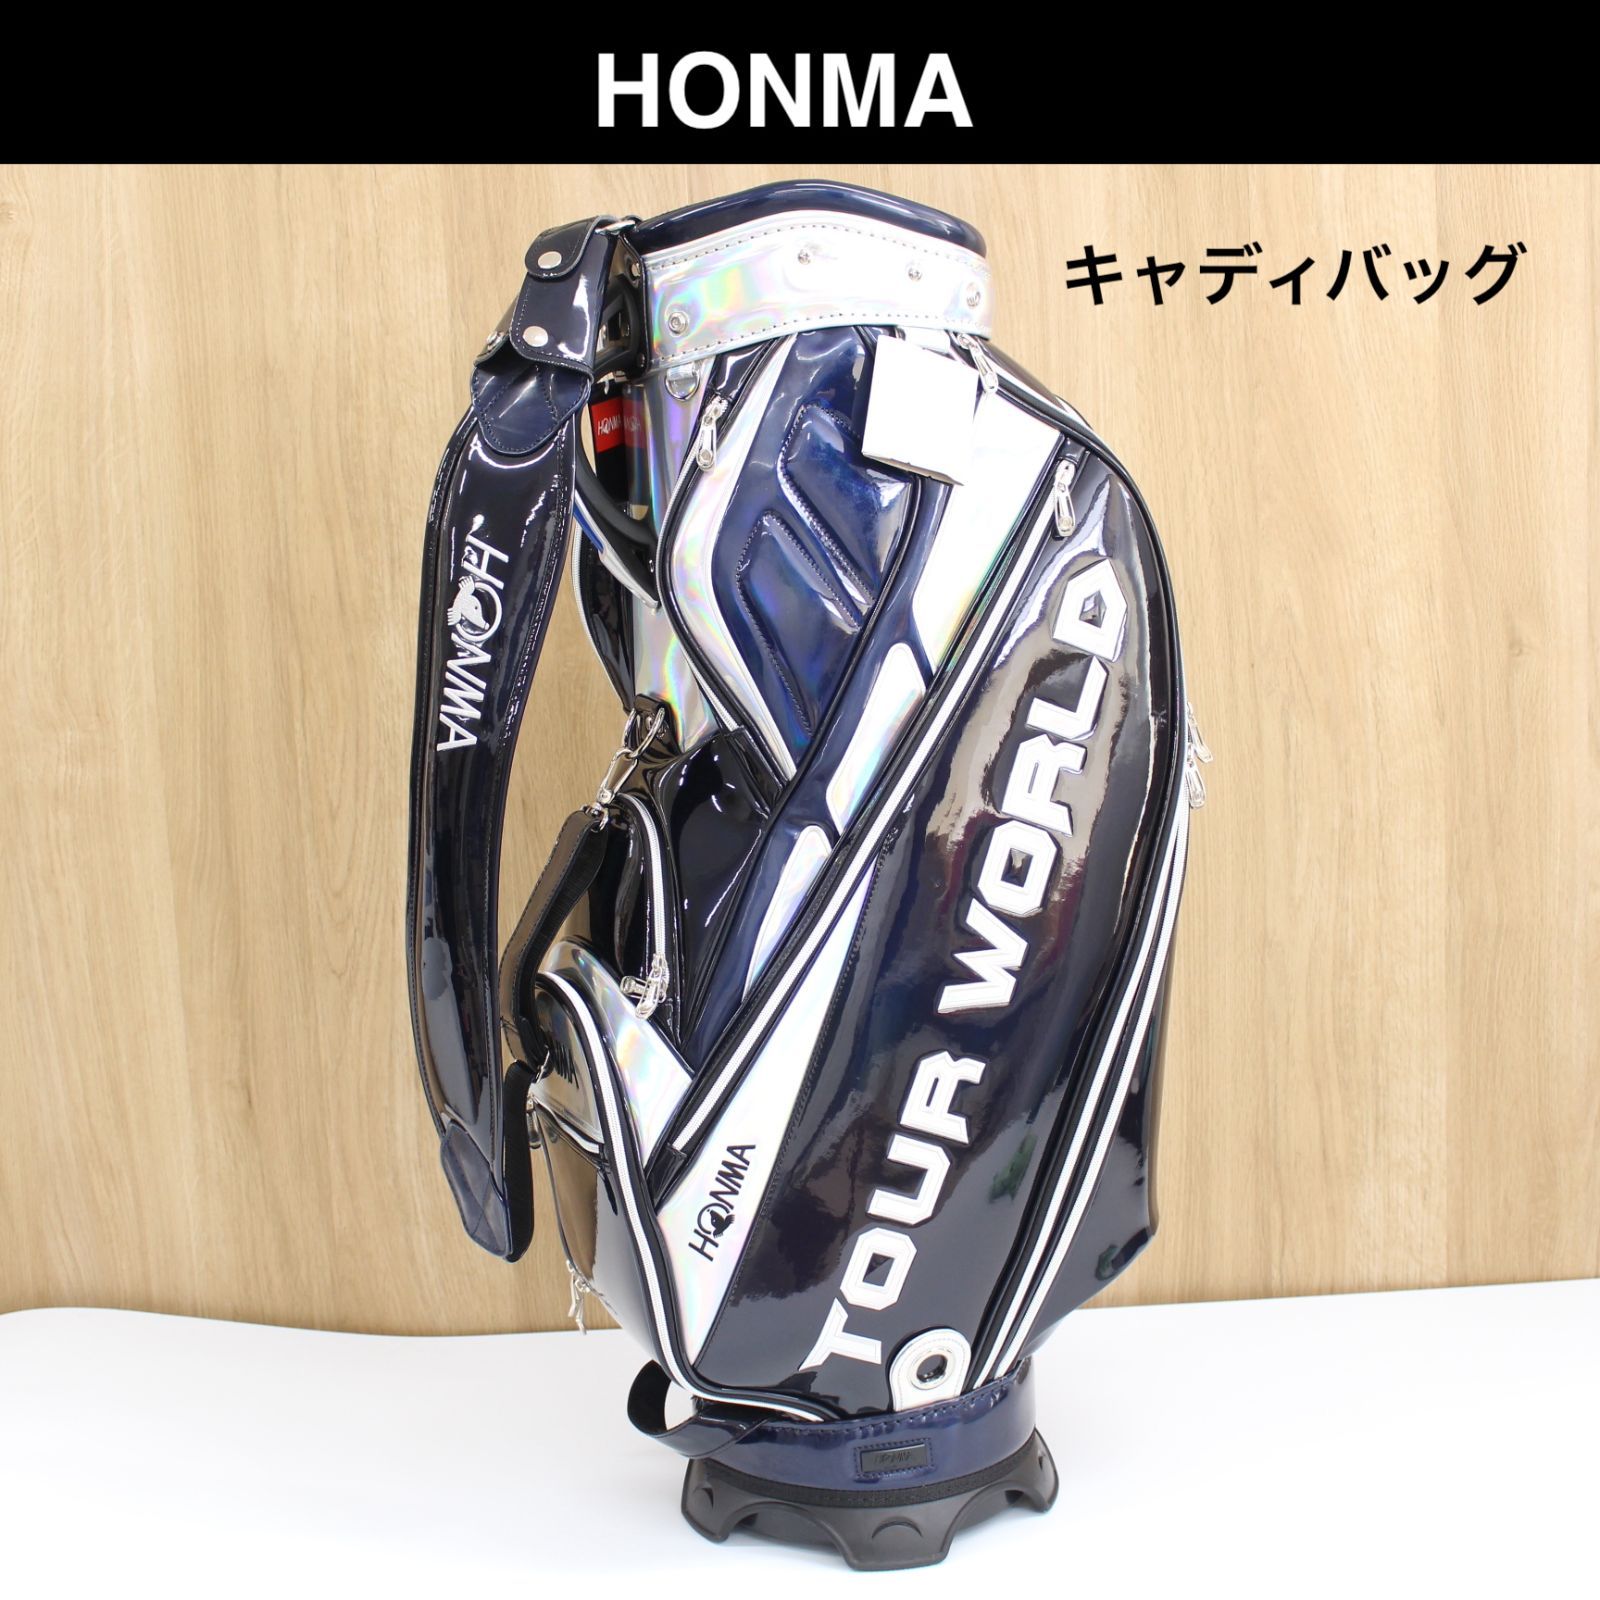 A1004】HONMA キャディバッグ TOUR WORLD 9型 ブルー 本間ゴルフ 